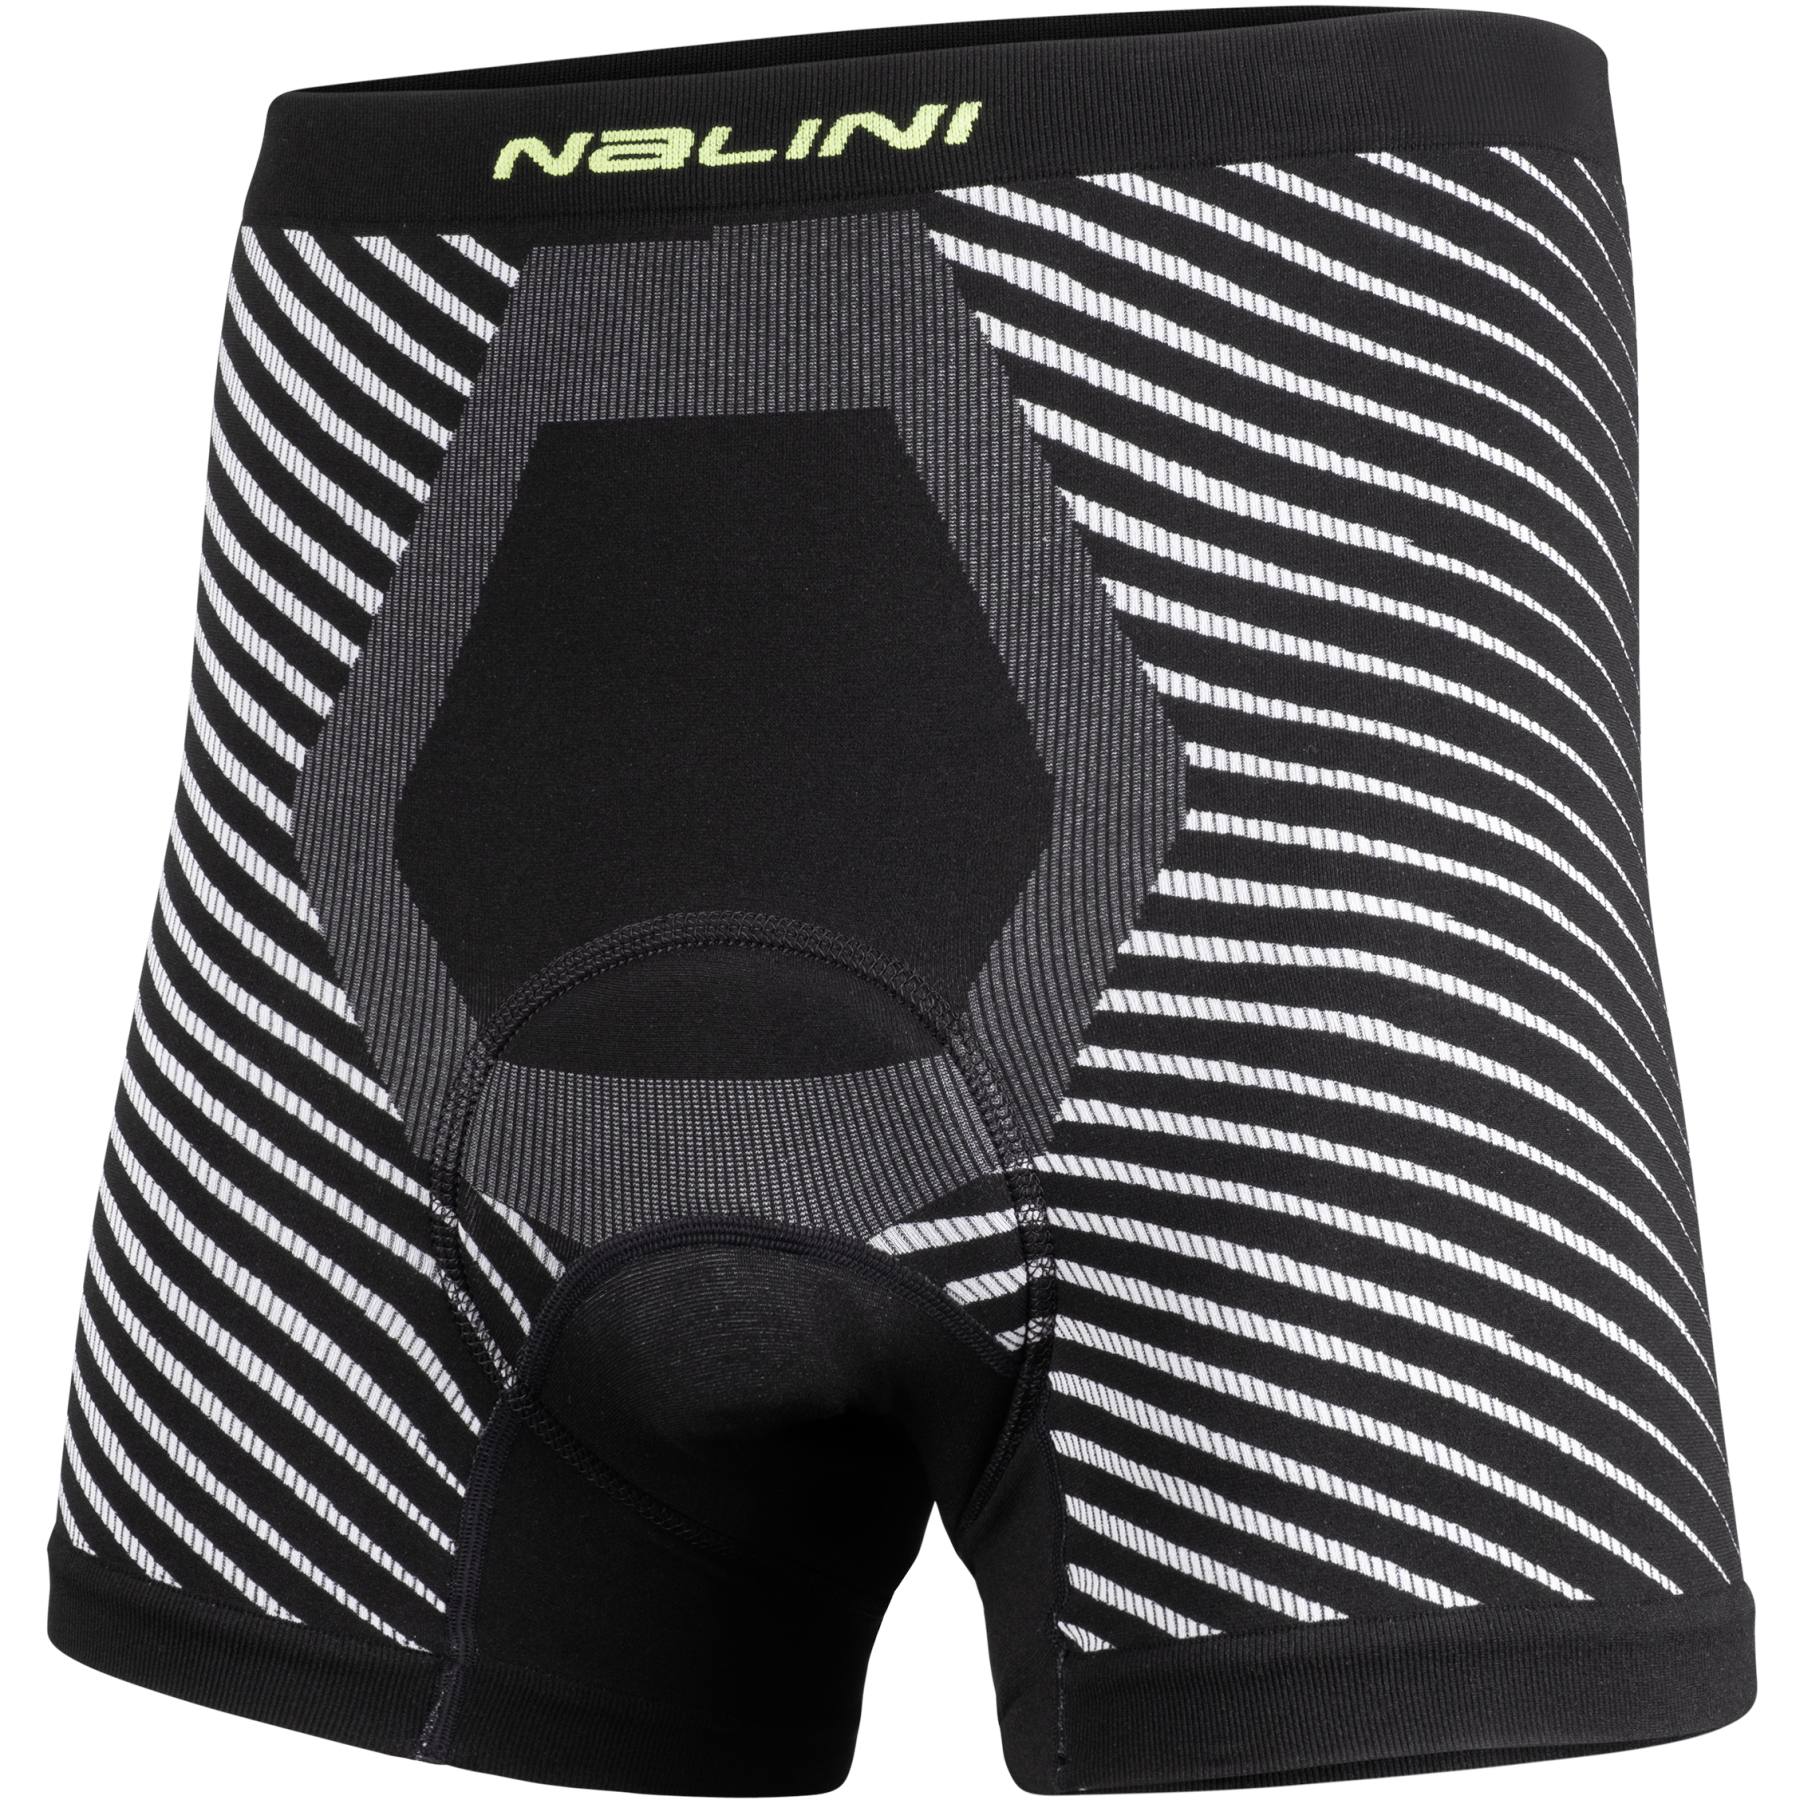 Productfoto van Nalini New Seamless Pants - black 4000